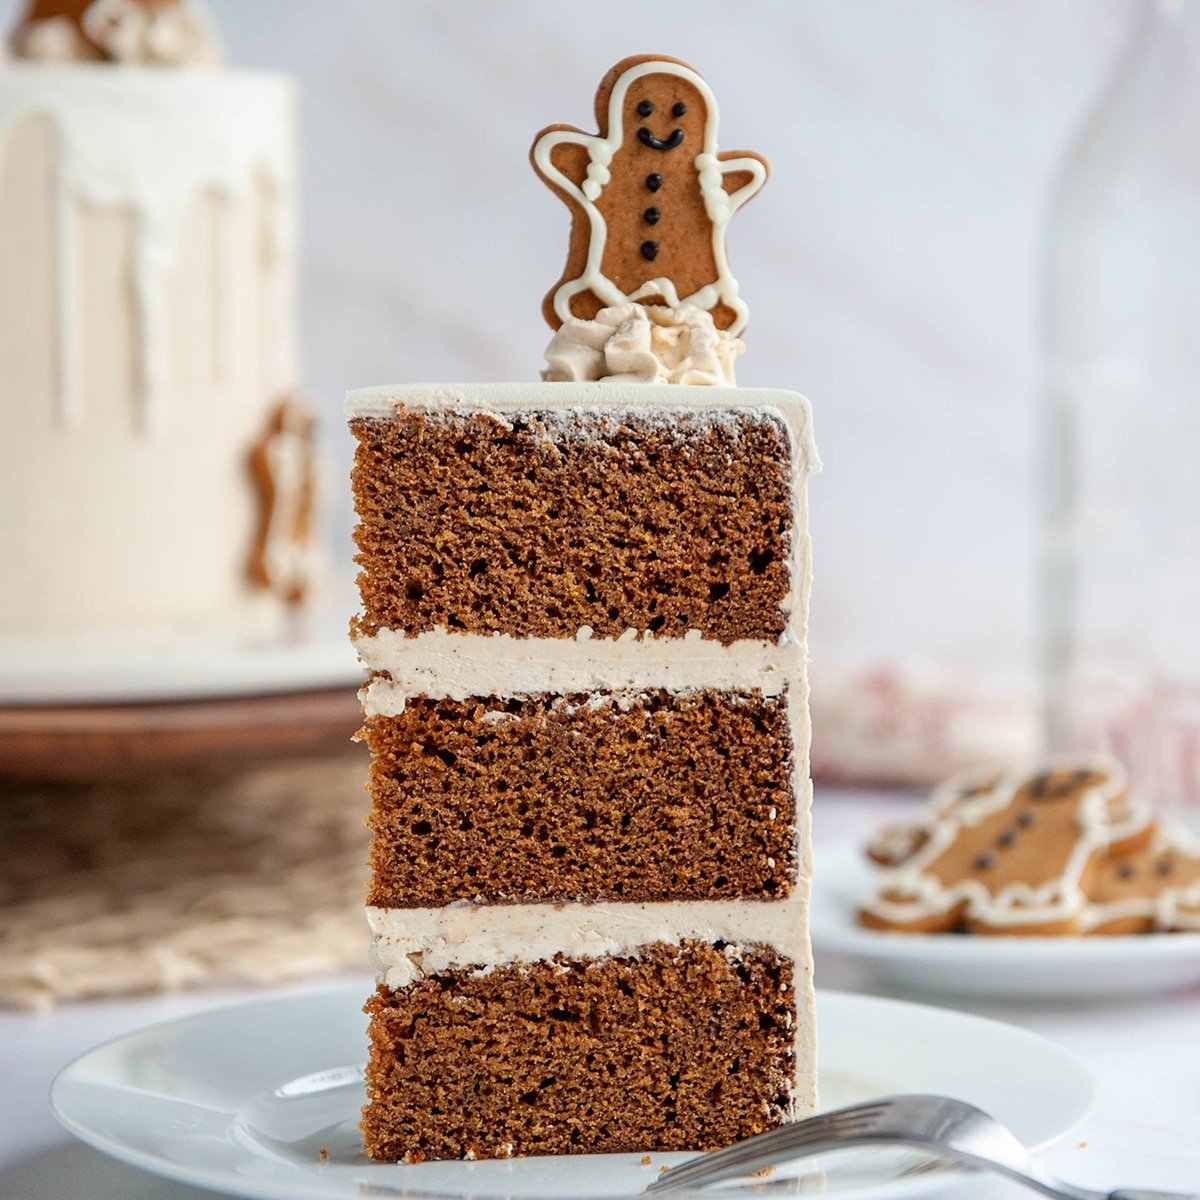 https://sugargeekshow.com/wp-content/uploads/2020/12/gingerbread_cake-_featured.jpg